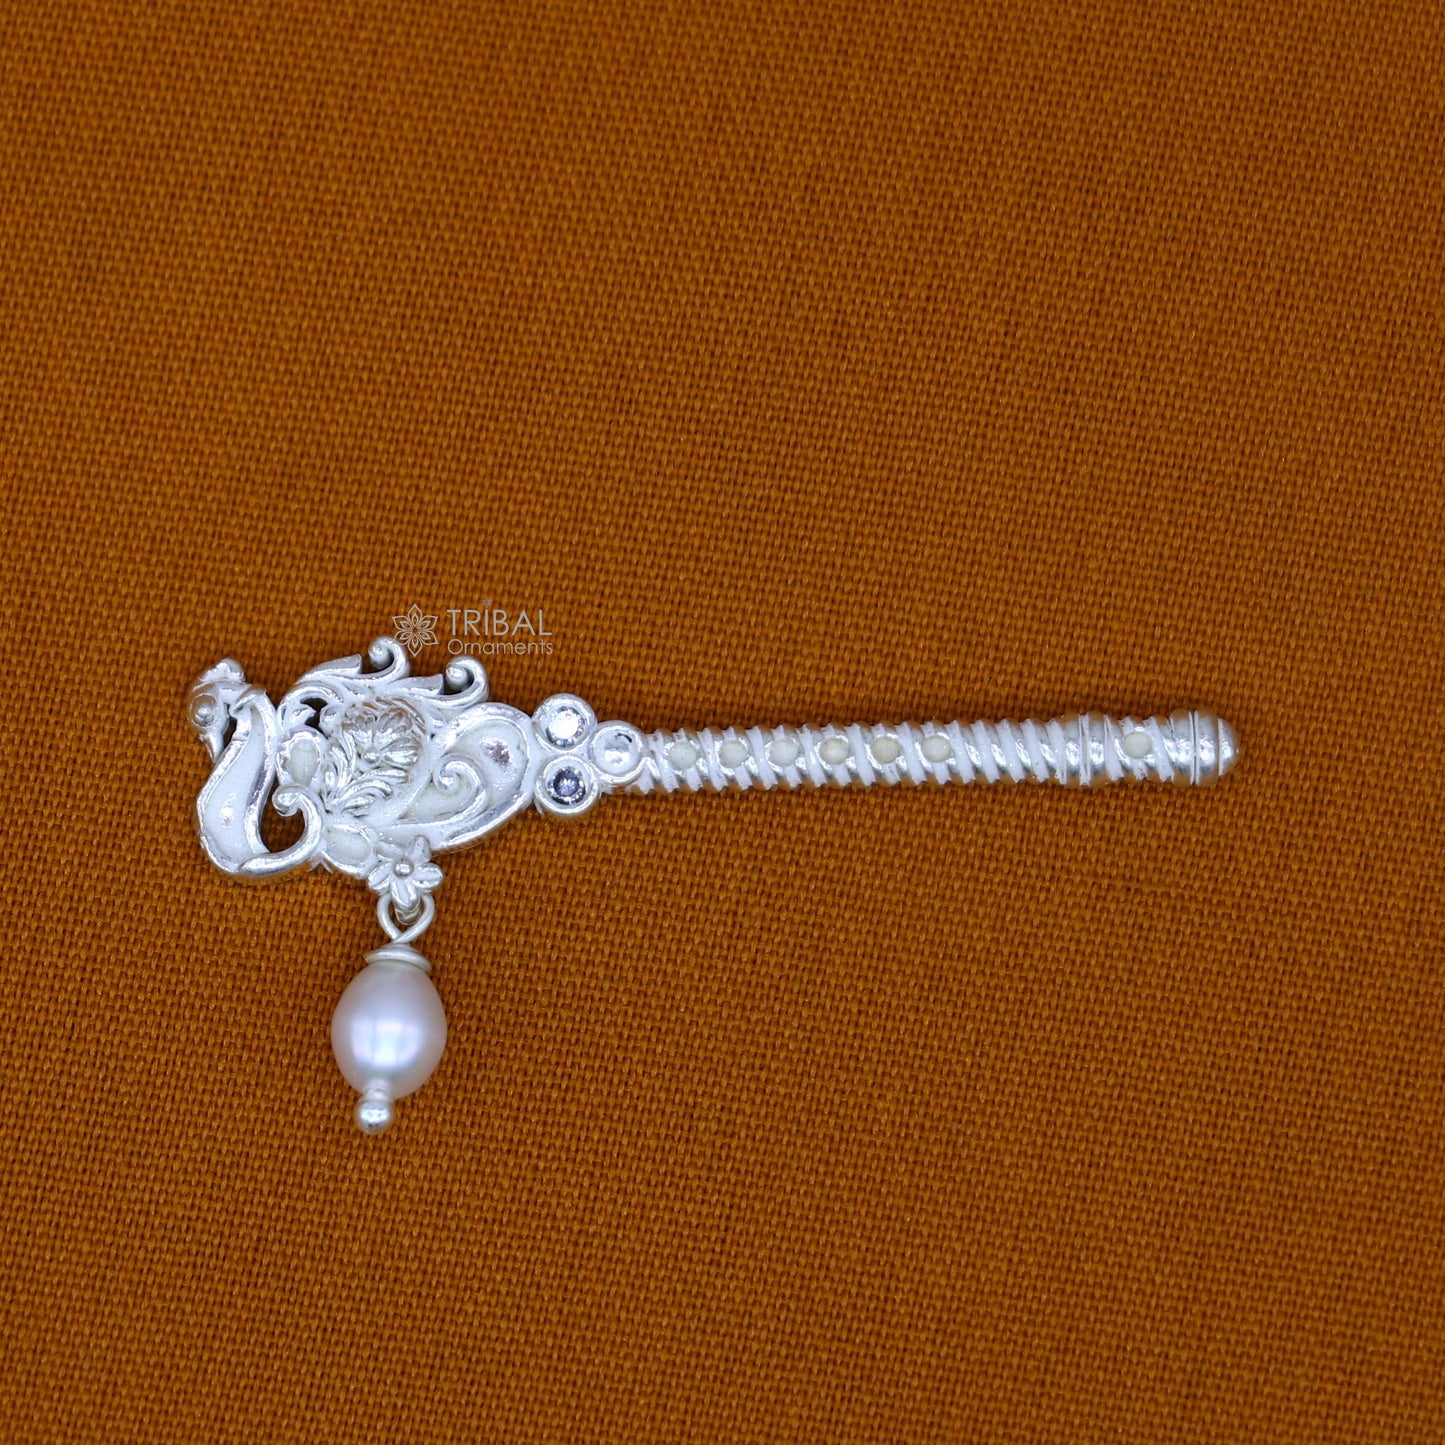 3.5cm" Flute divine 925 sterling silver handmade peacock design idol Krishna flute, silver bansuri, laddu Gopala flute, Krishna flute su1262 - TRIBAL ORNAMENTS